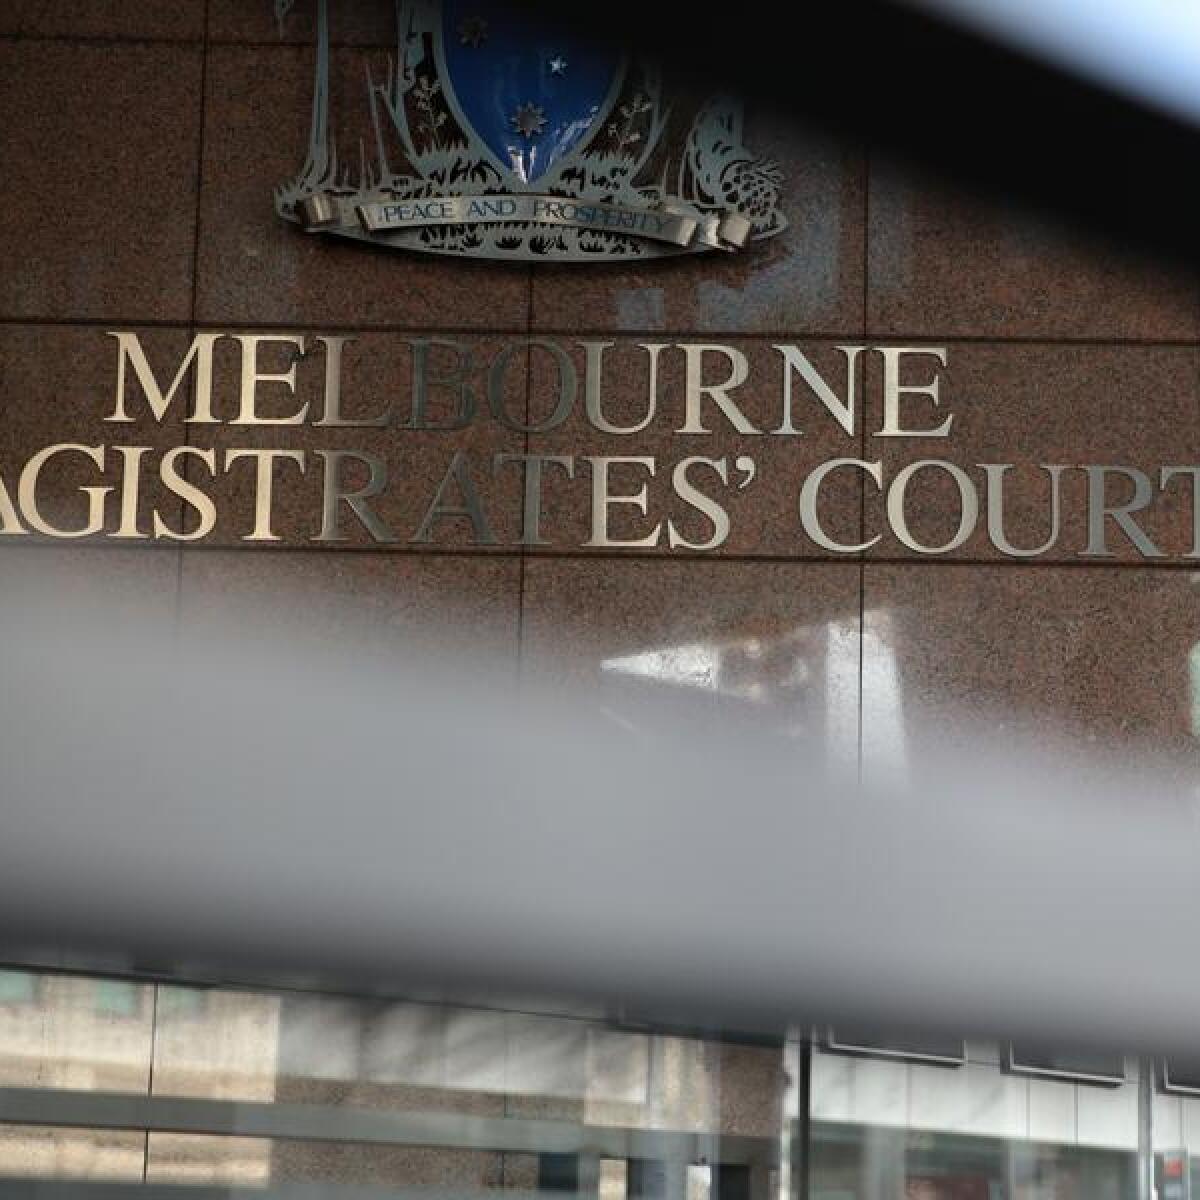 Melbourne Magistrates Court signage (file image)